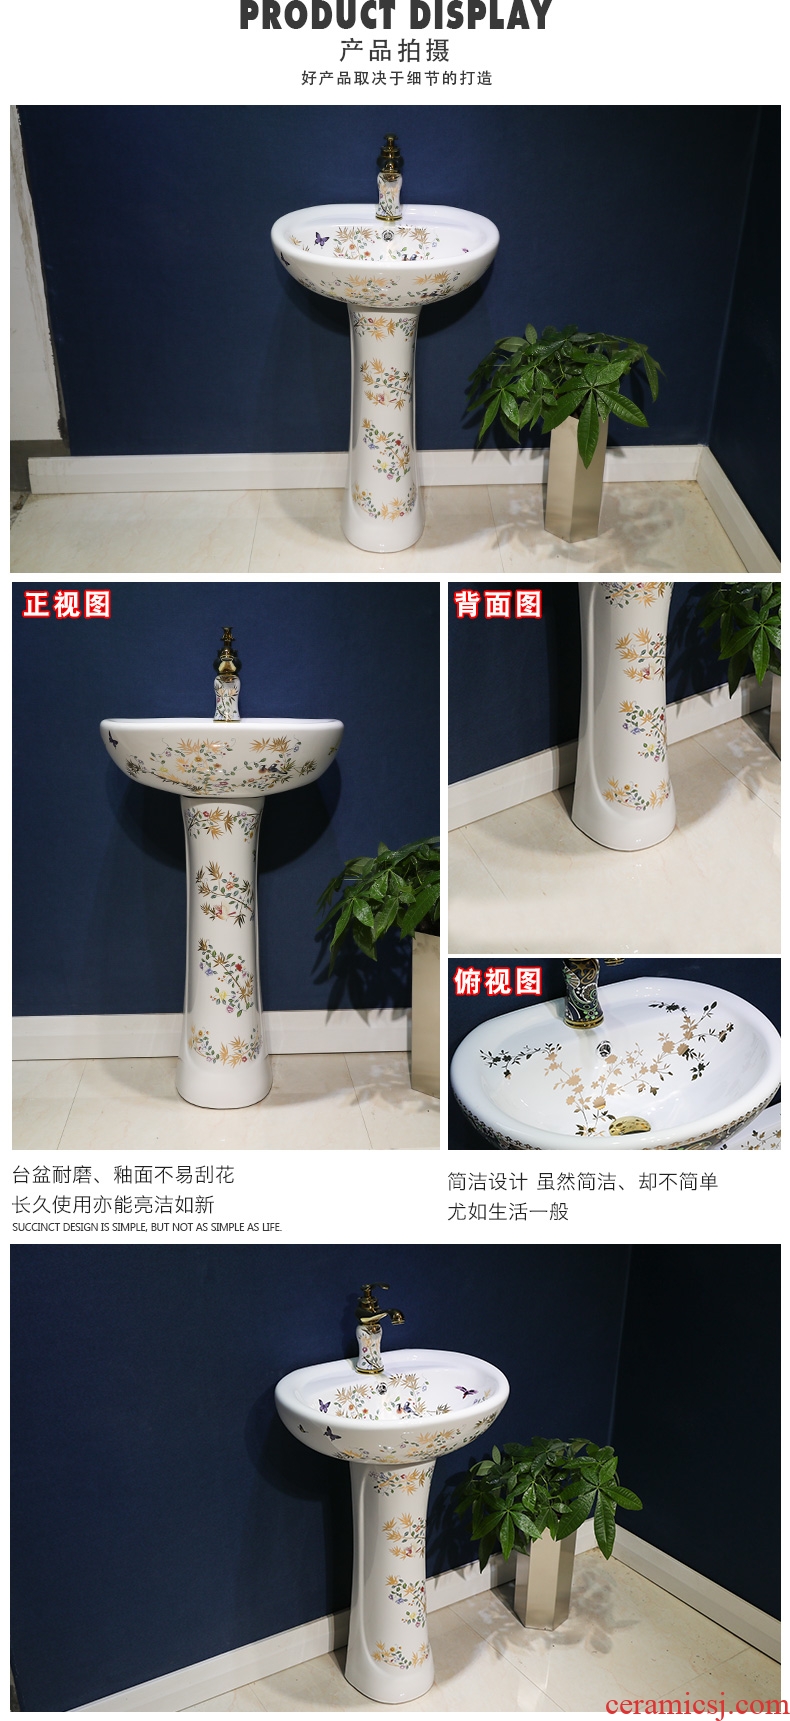 M the pillar type lavatory jingdezhen ceramic basin one-piece art pillar lavabo vertical landing platform